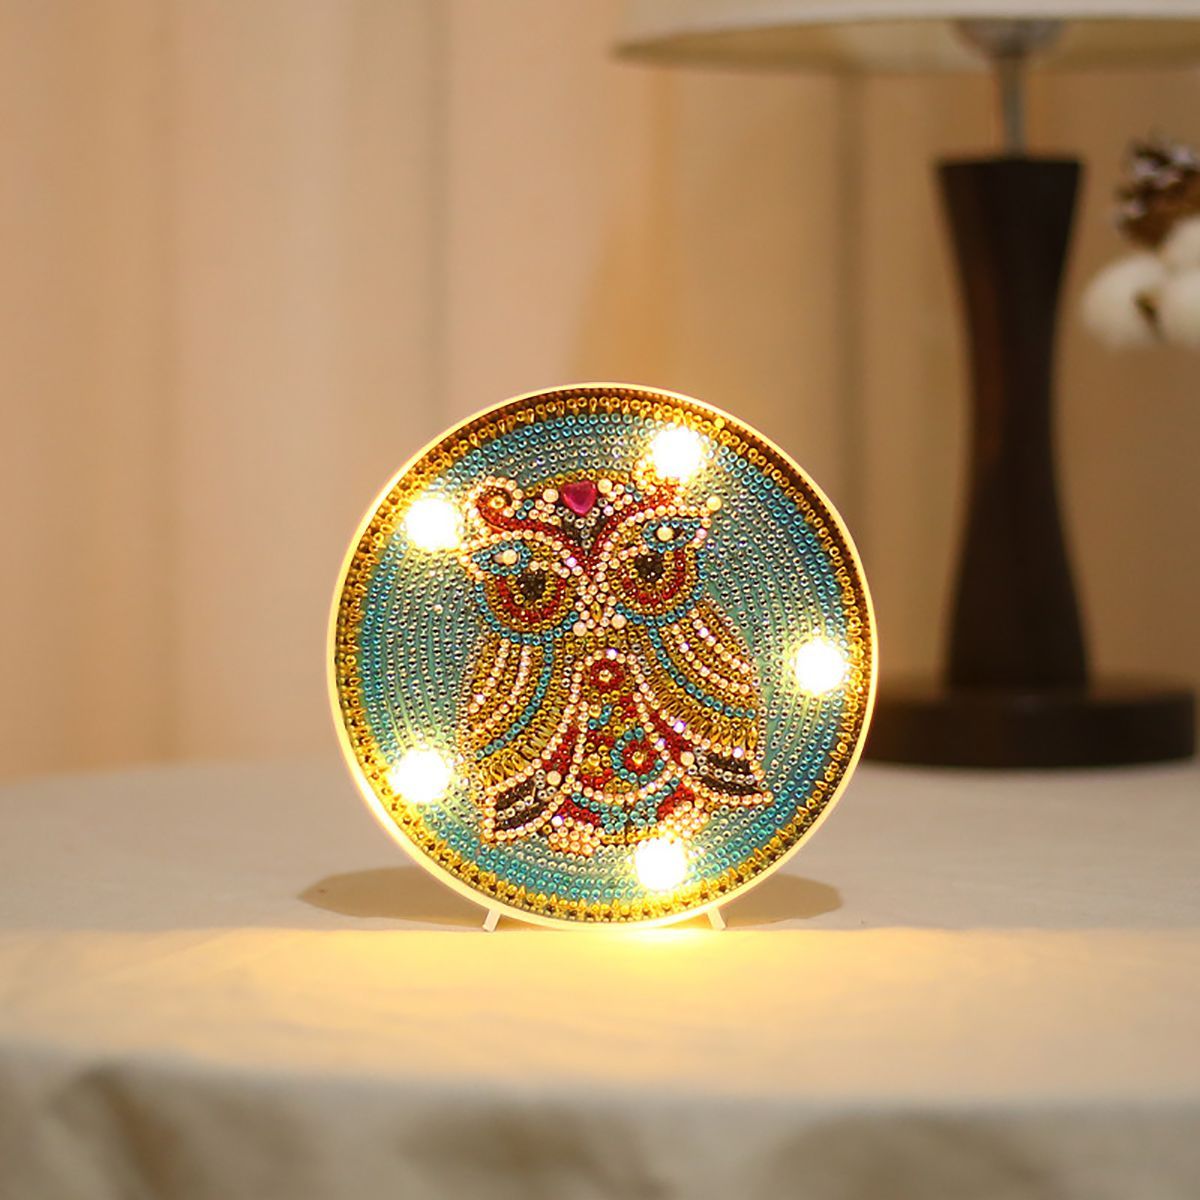 DIY-LED-Diamond-Painting-Mandala-Elephant-Owl-Night-Light-Art-Home-Decor-Gift-1591192